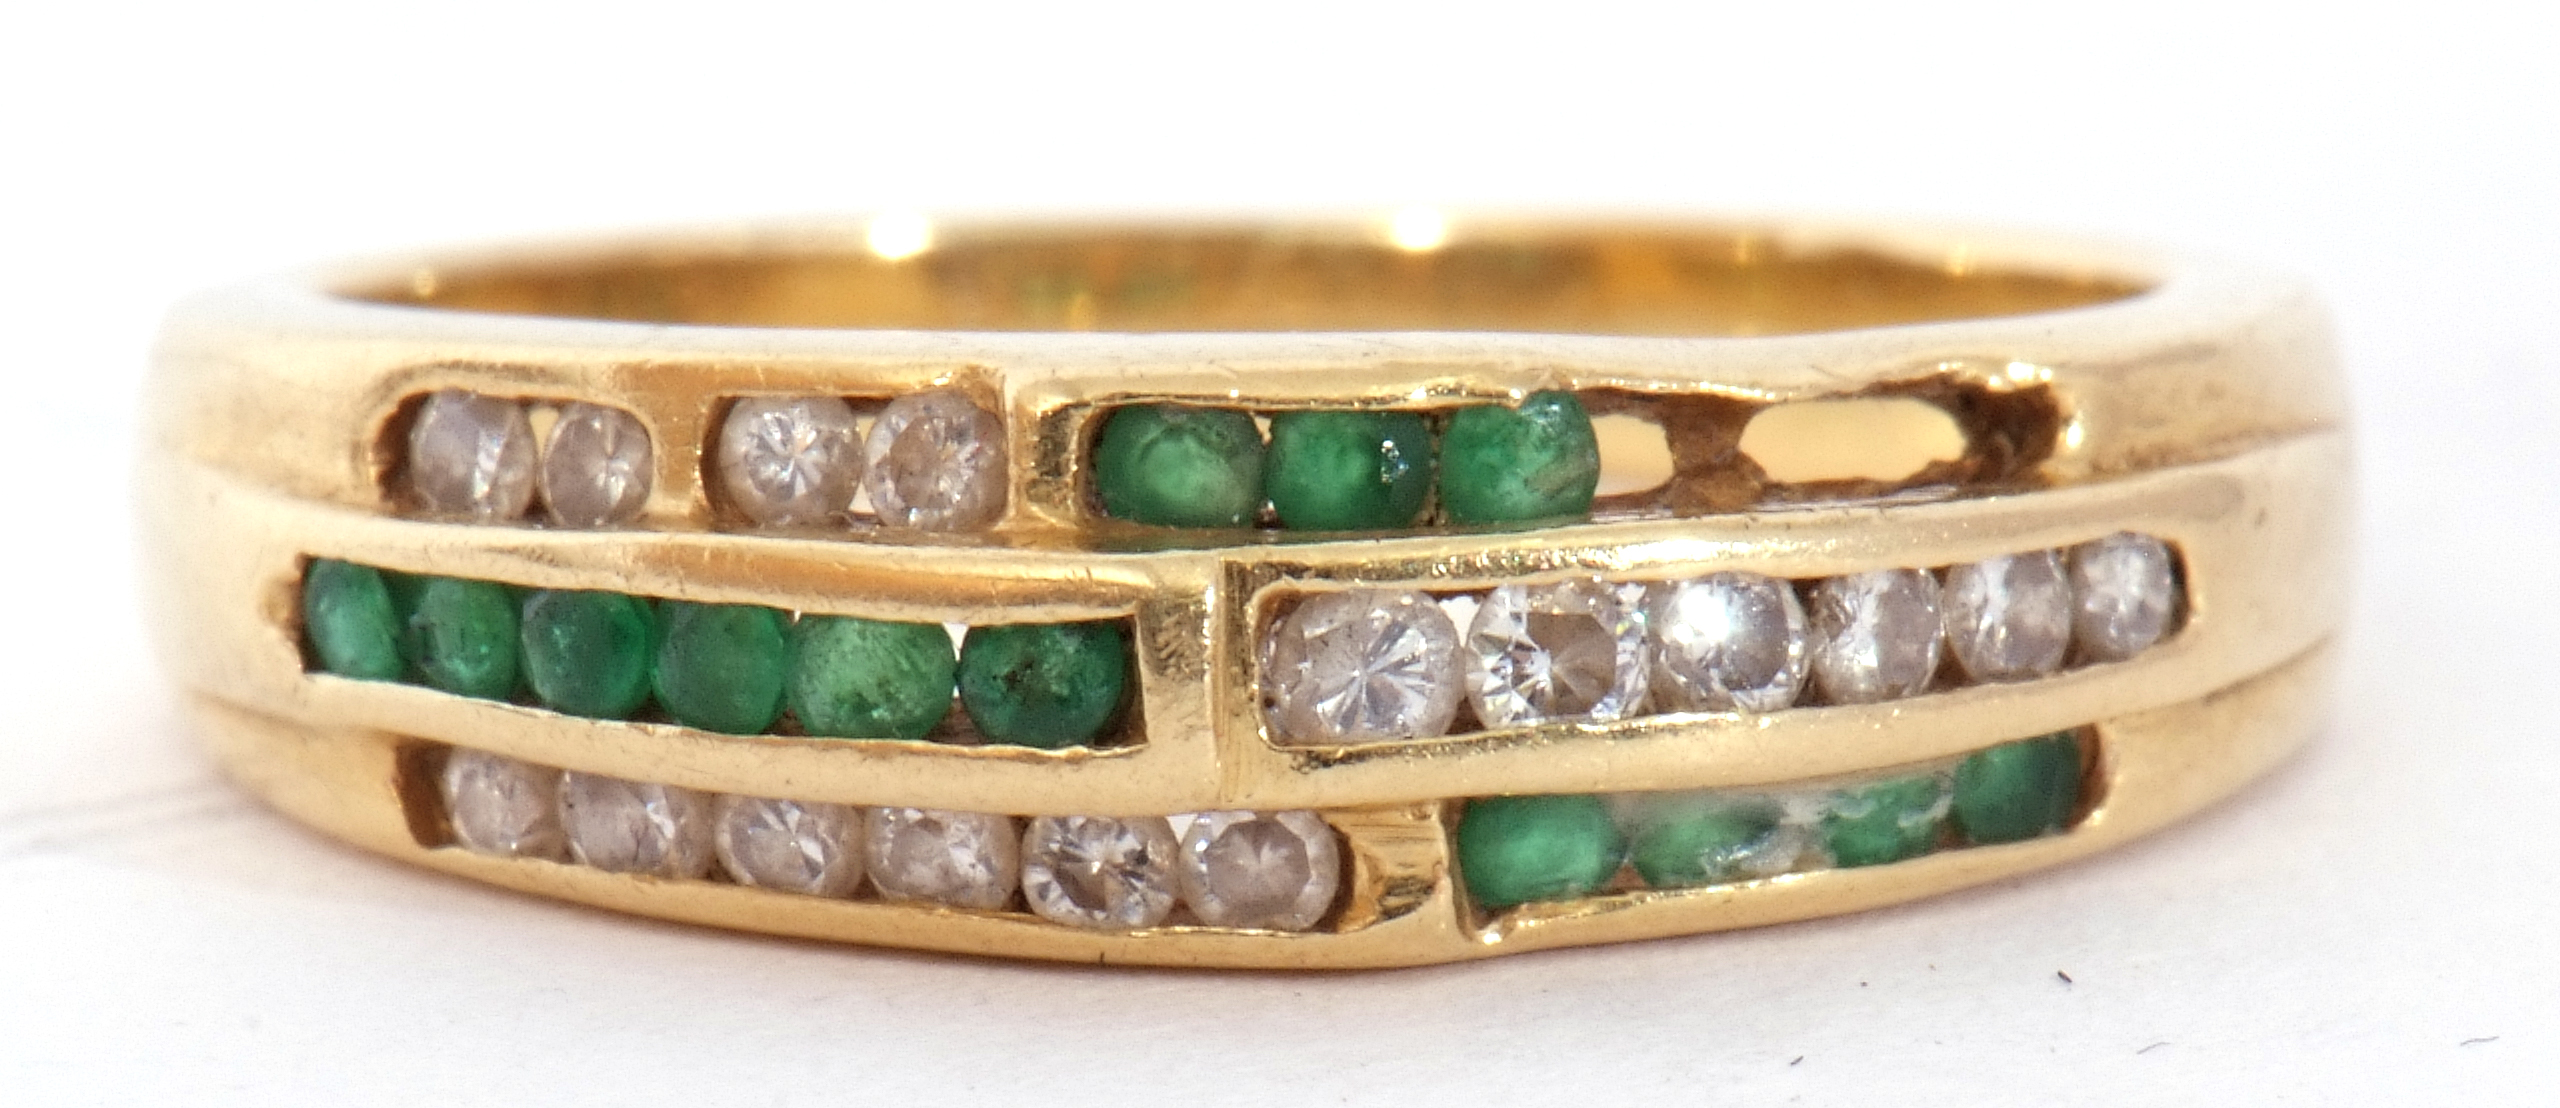 Emerald and diamond set half hoop ring, an Art Deco design of three bands of channel set diamonds